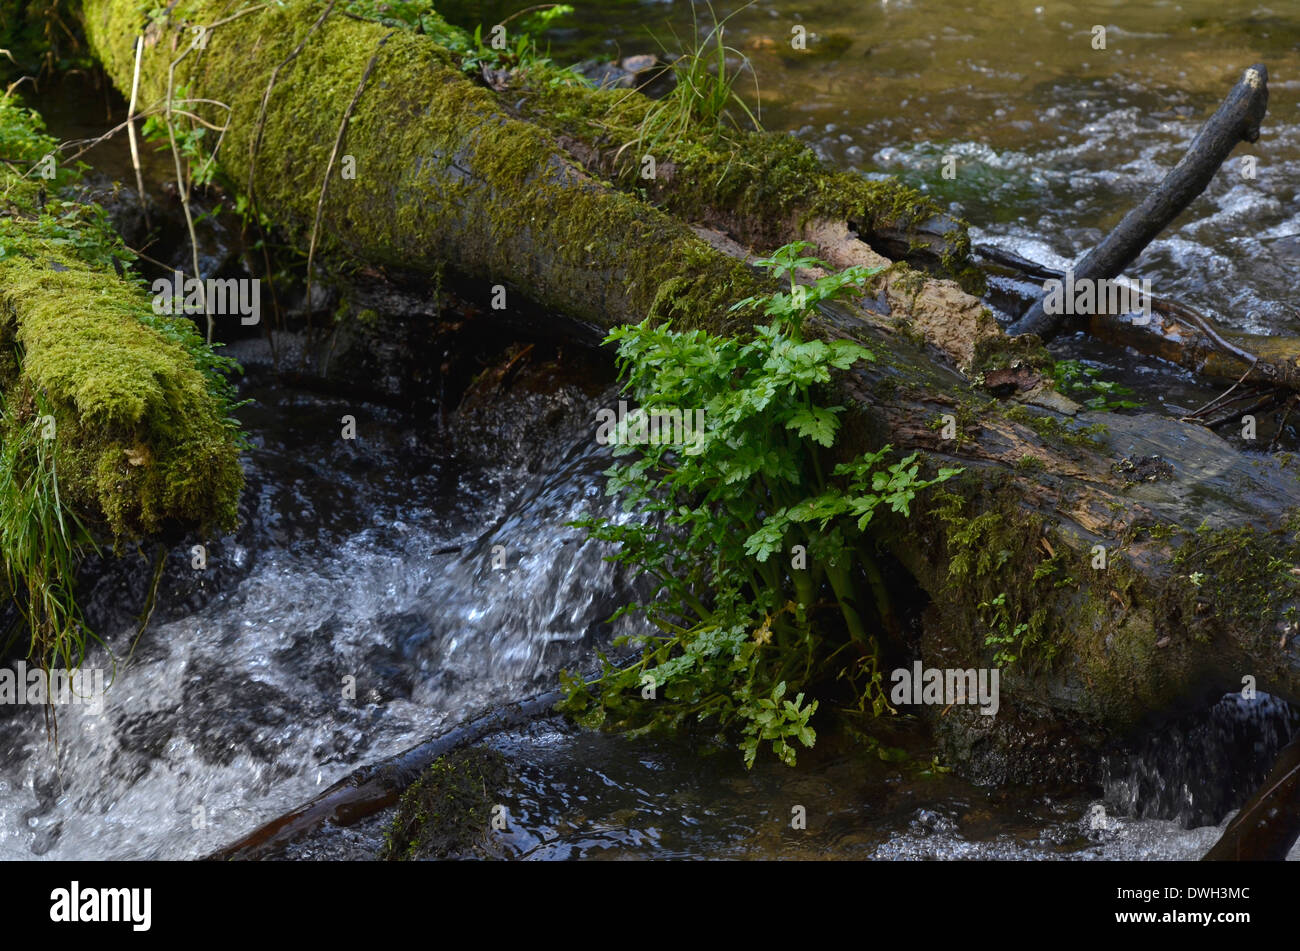 Hemlock Water Dropwort / Oenanthe crocata in a flowing stream. One of UK's most poisonous plants. Stock Photo